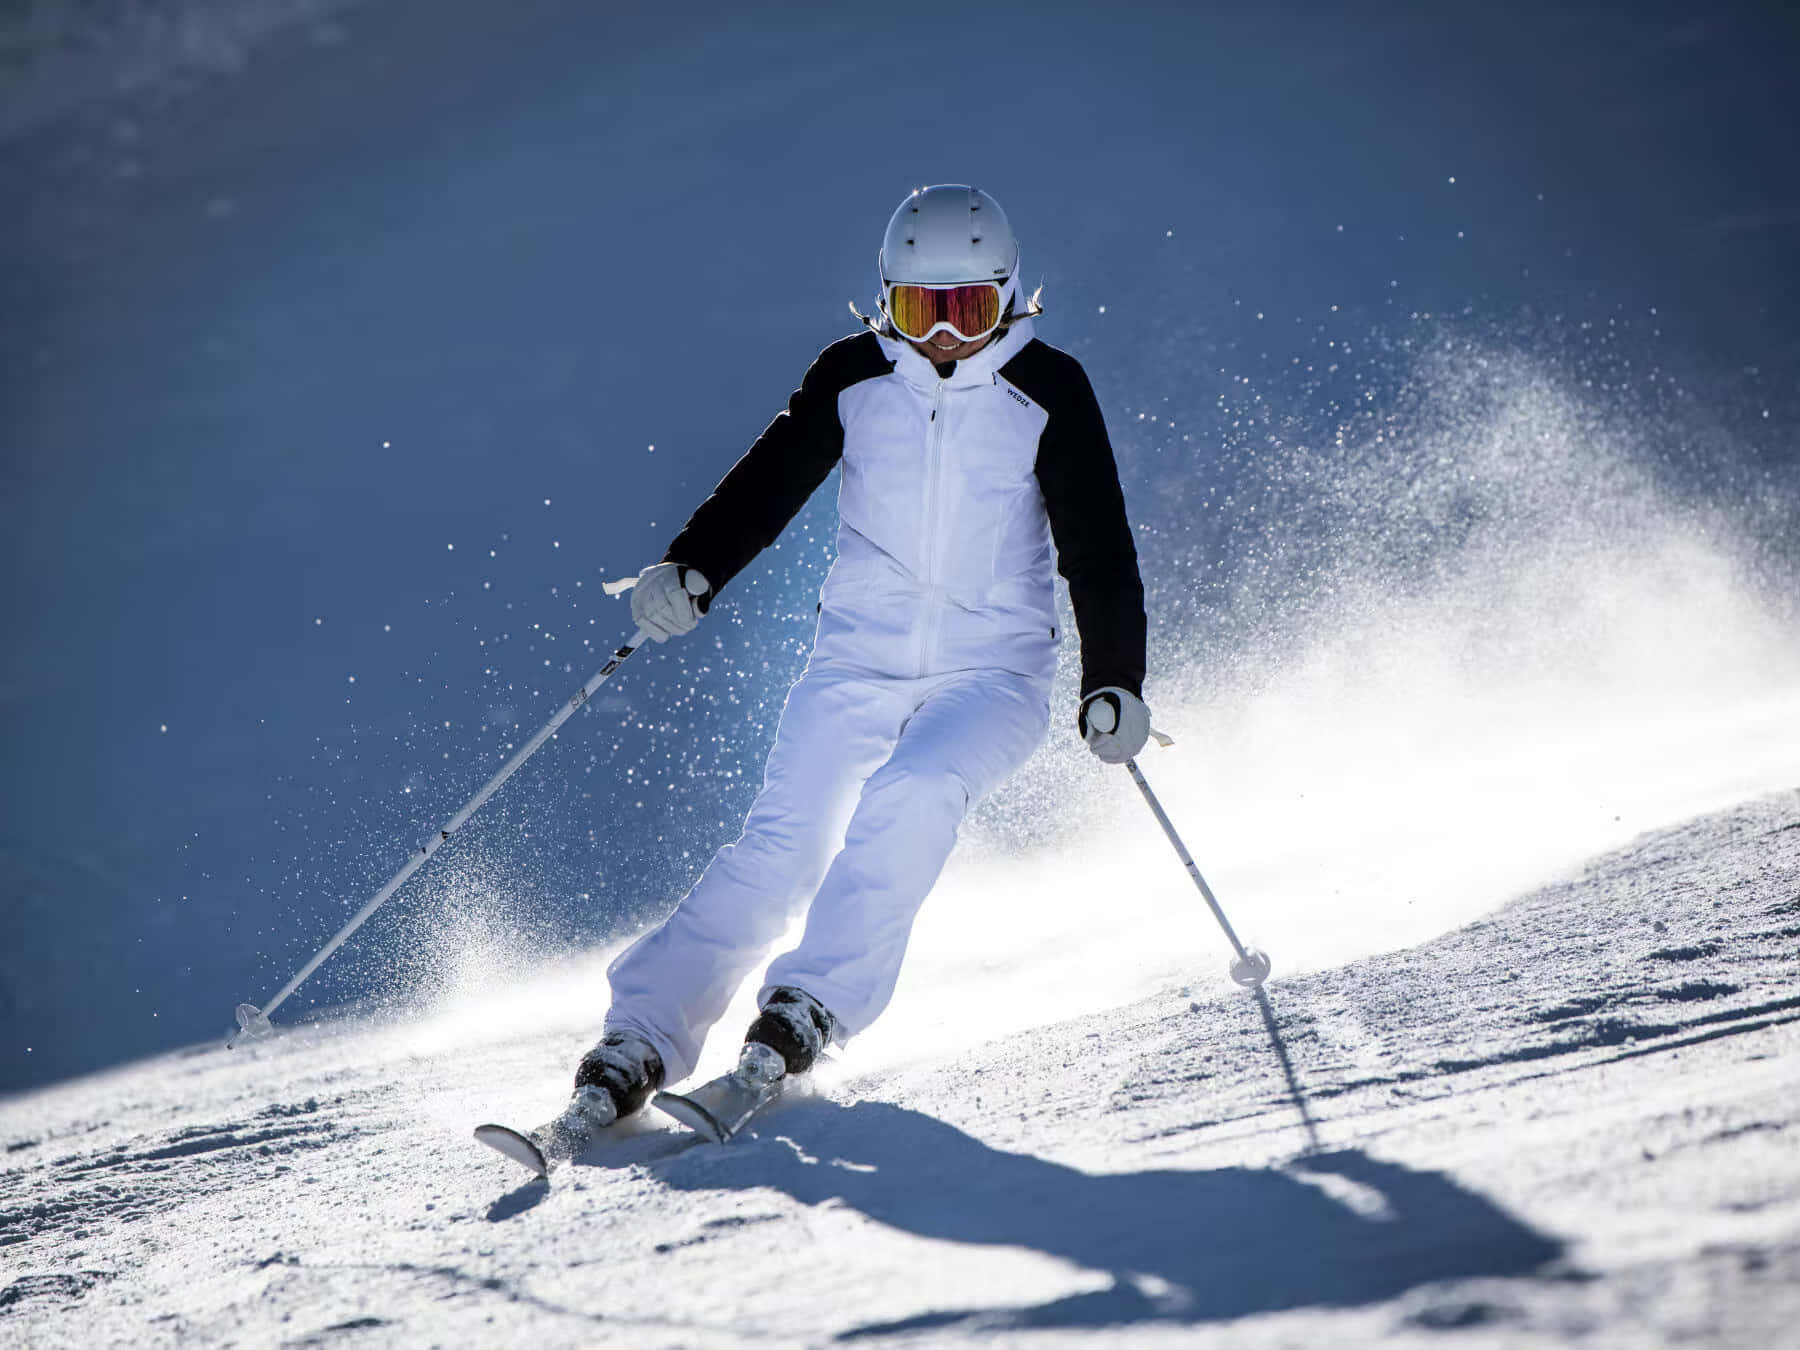 Make unforgettable memories on the ski slopes